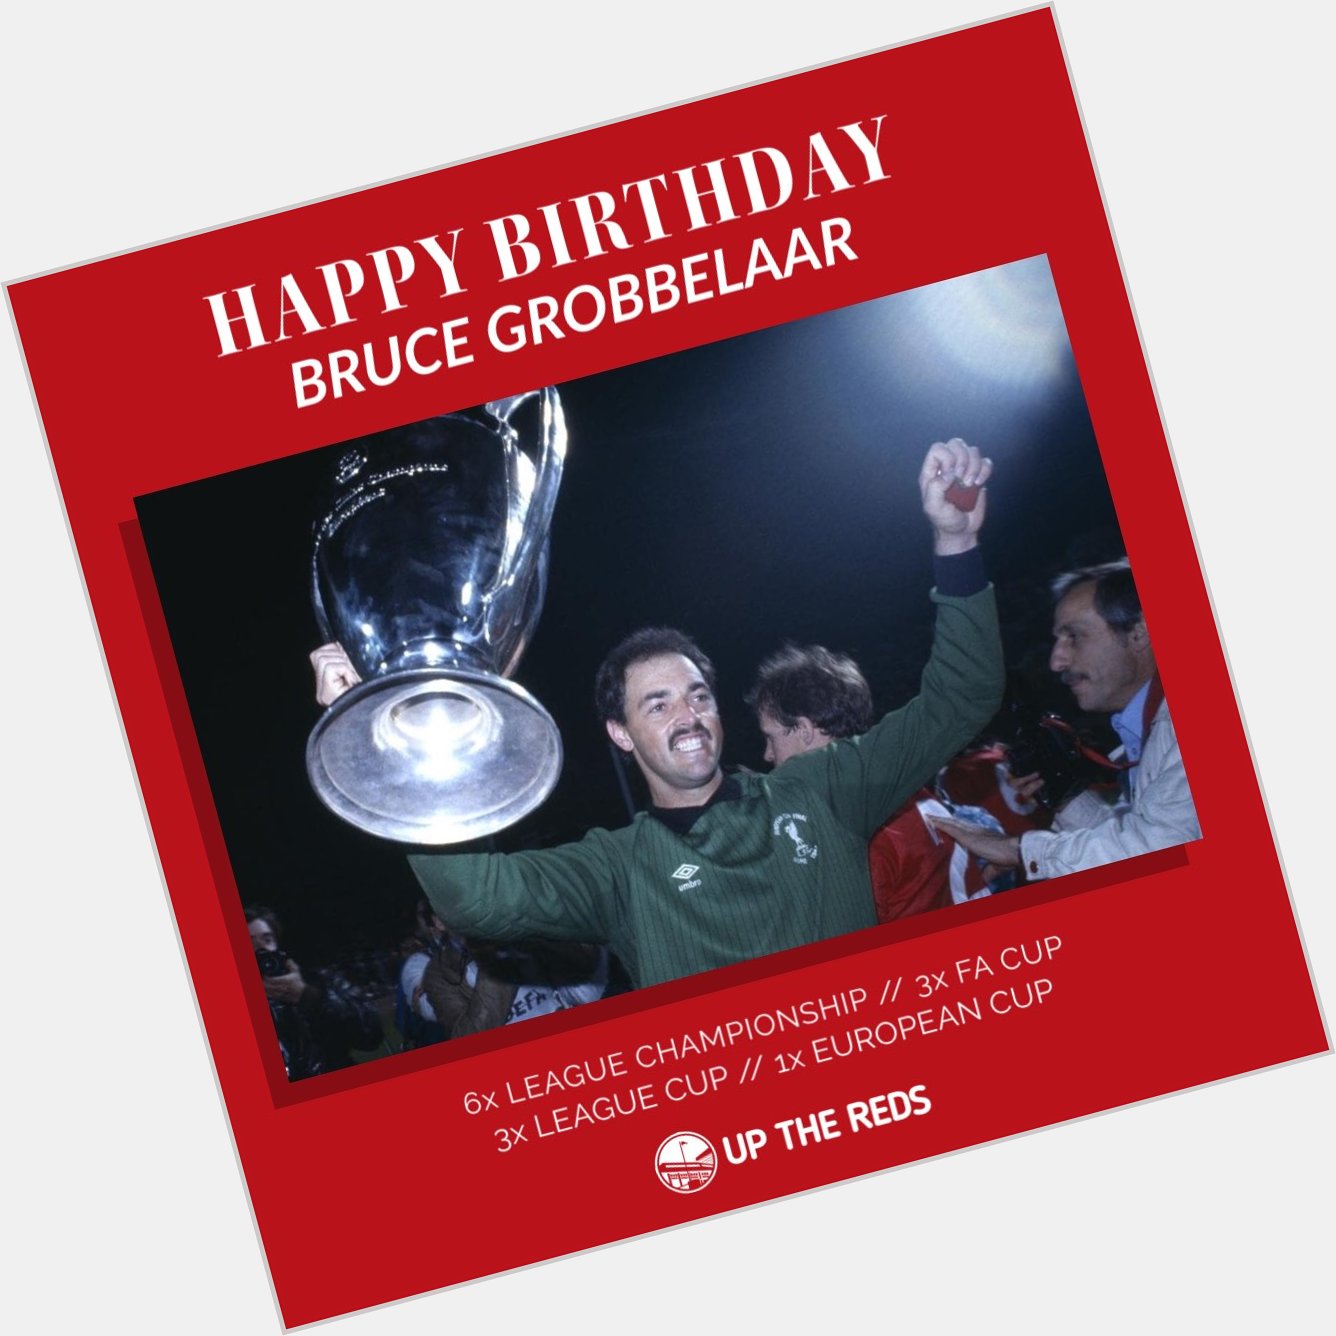 Happy birthday, Bruce Grobbelaar!   